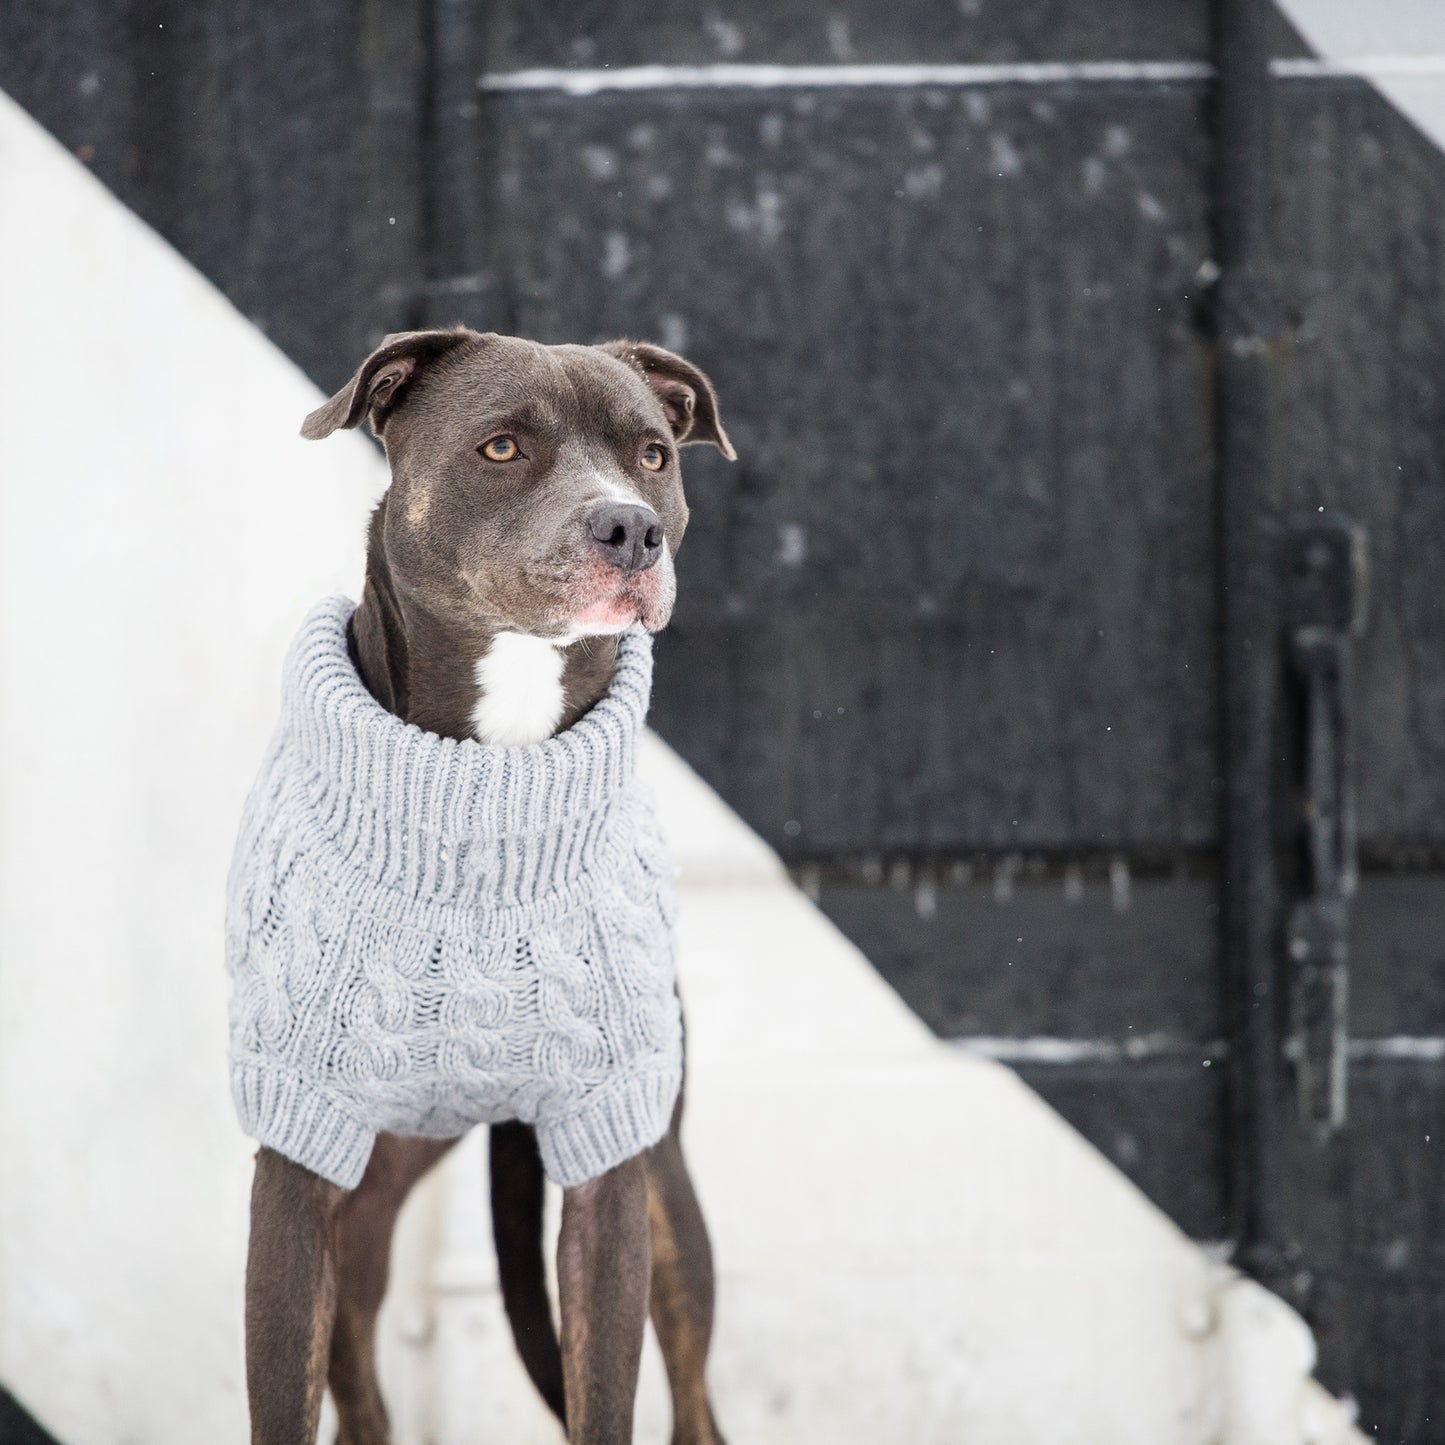 Chalet Sweater - Grey